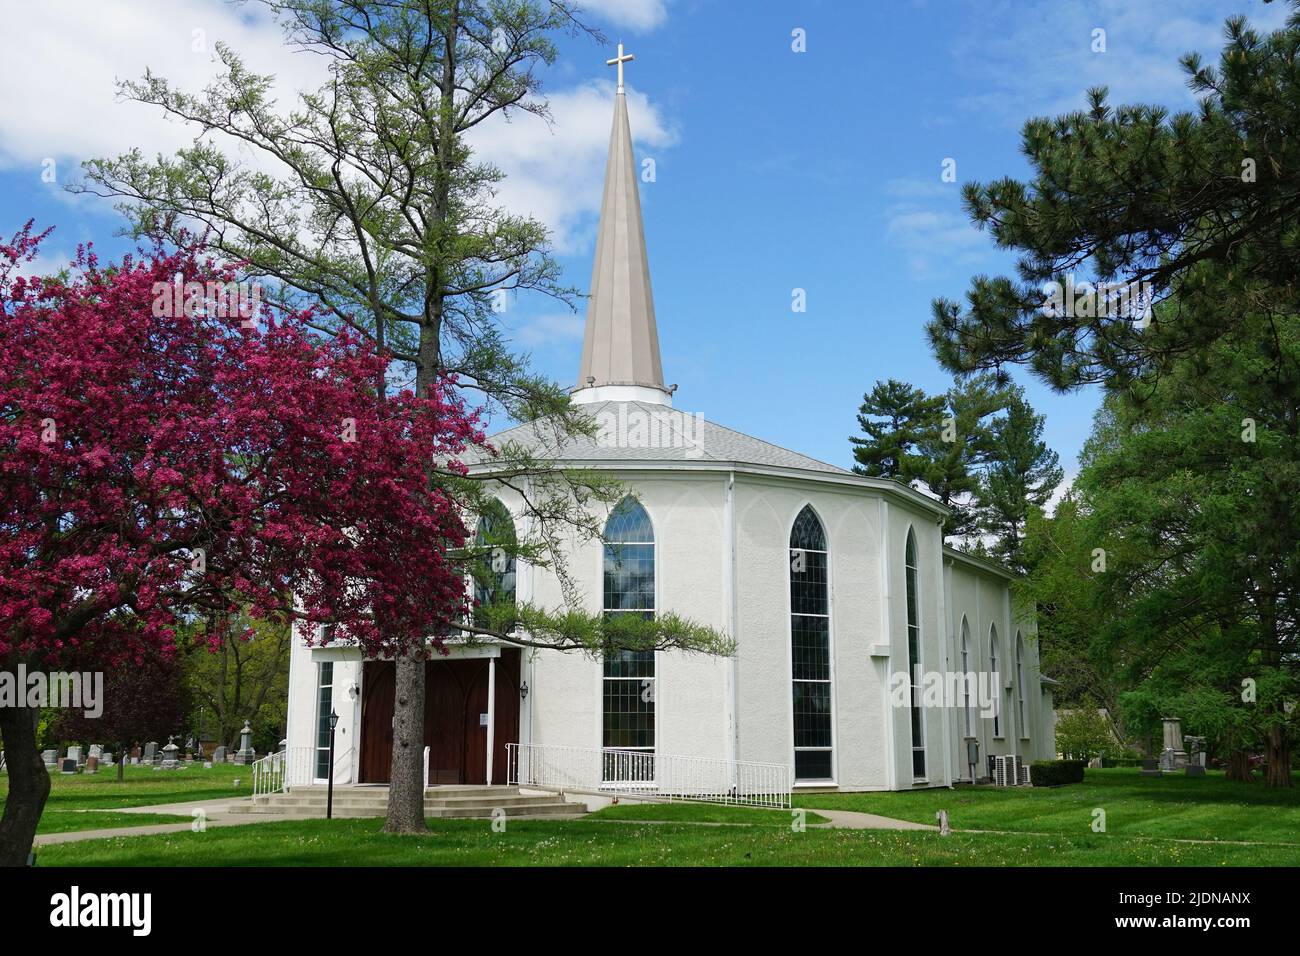 St. Vincent de Paul Roman Catholic Church, Niagara-on-the-Lake, Niagara Peninsula, Ontario province, Canada, North America Stock Photo